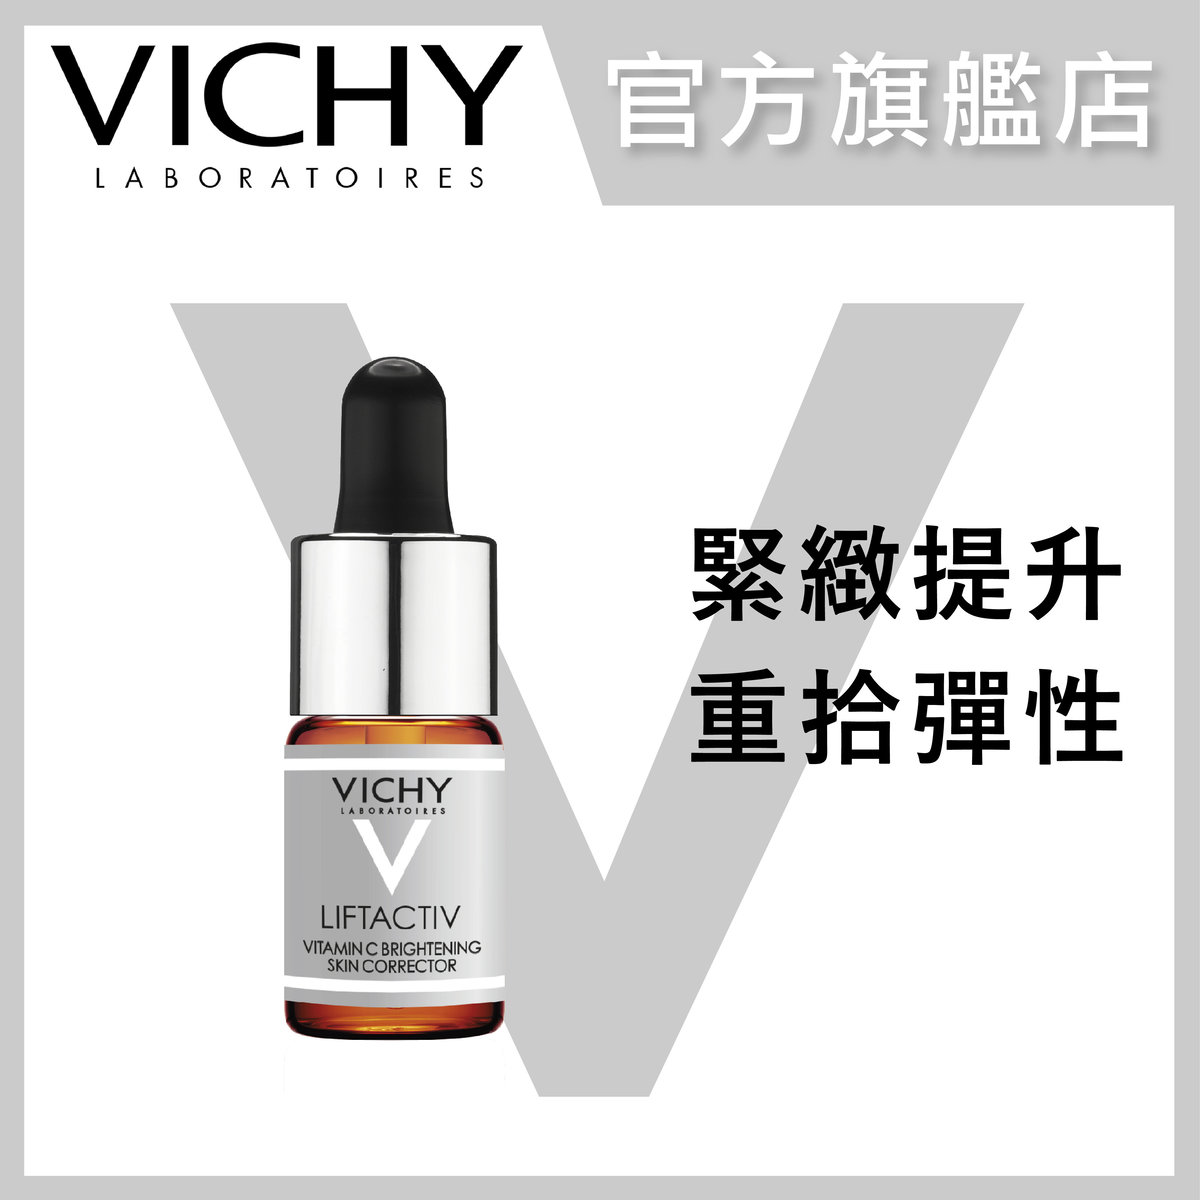 Vichy Exp2021 10 31 Batch 54s22b Liftactiv Vit C Brightening Skin Corrector 10ml Hktvmall Online Shopping